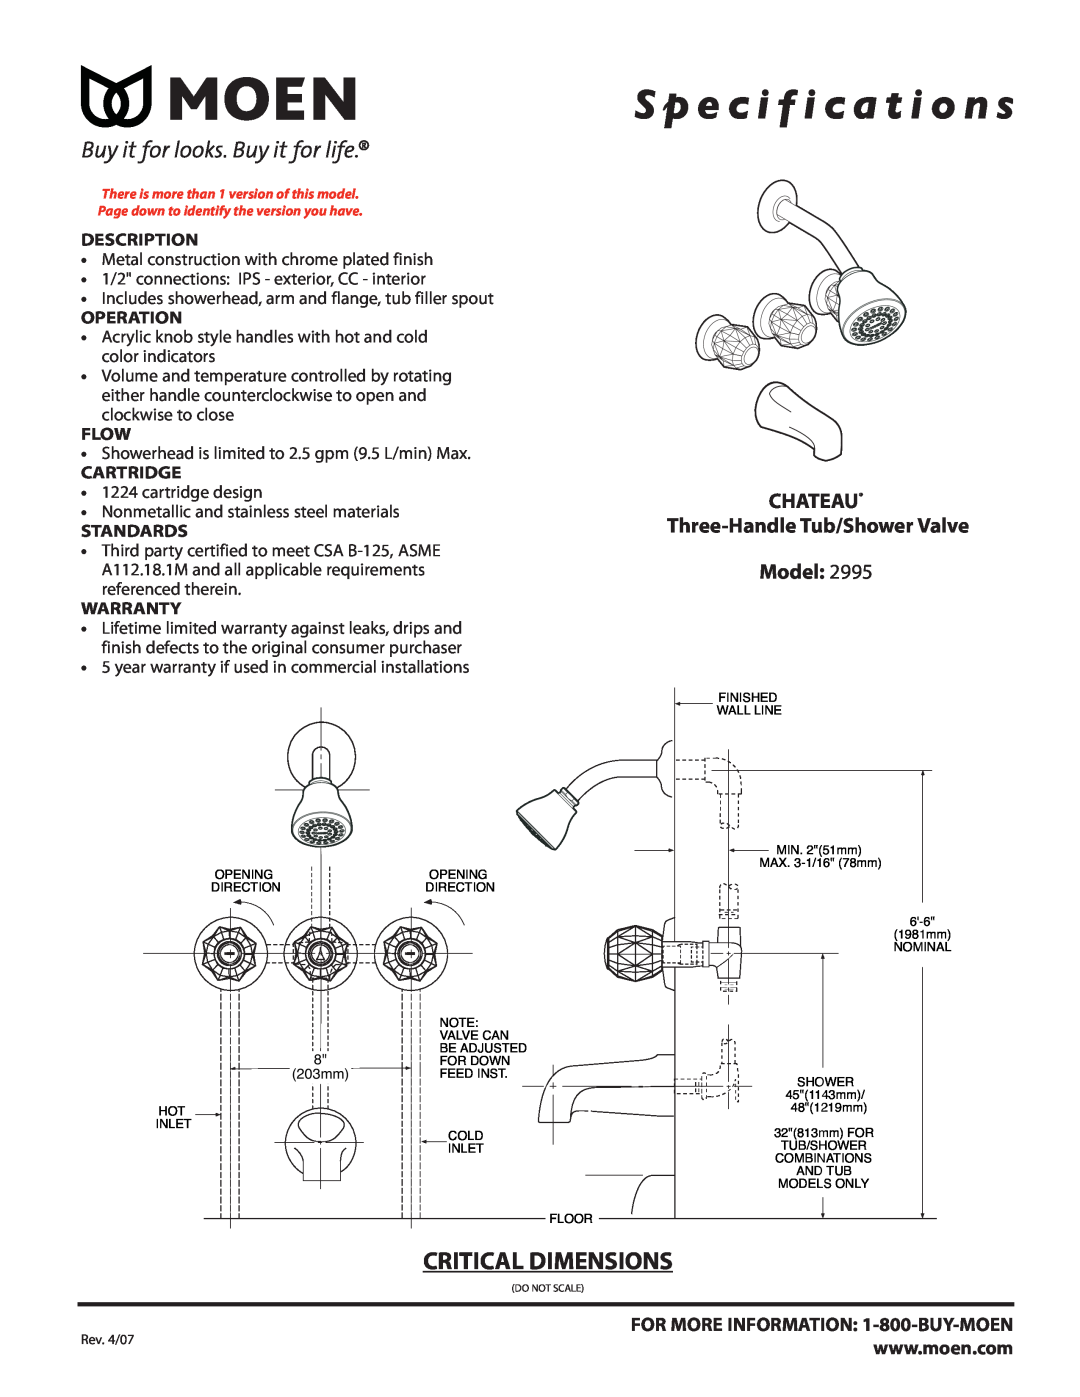 Moen 2995 specifications S p e c i f i c a t i o n s, Critical Dimensions, CHATEAU Three-Handle Tub/Shower Valve Model 